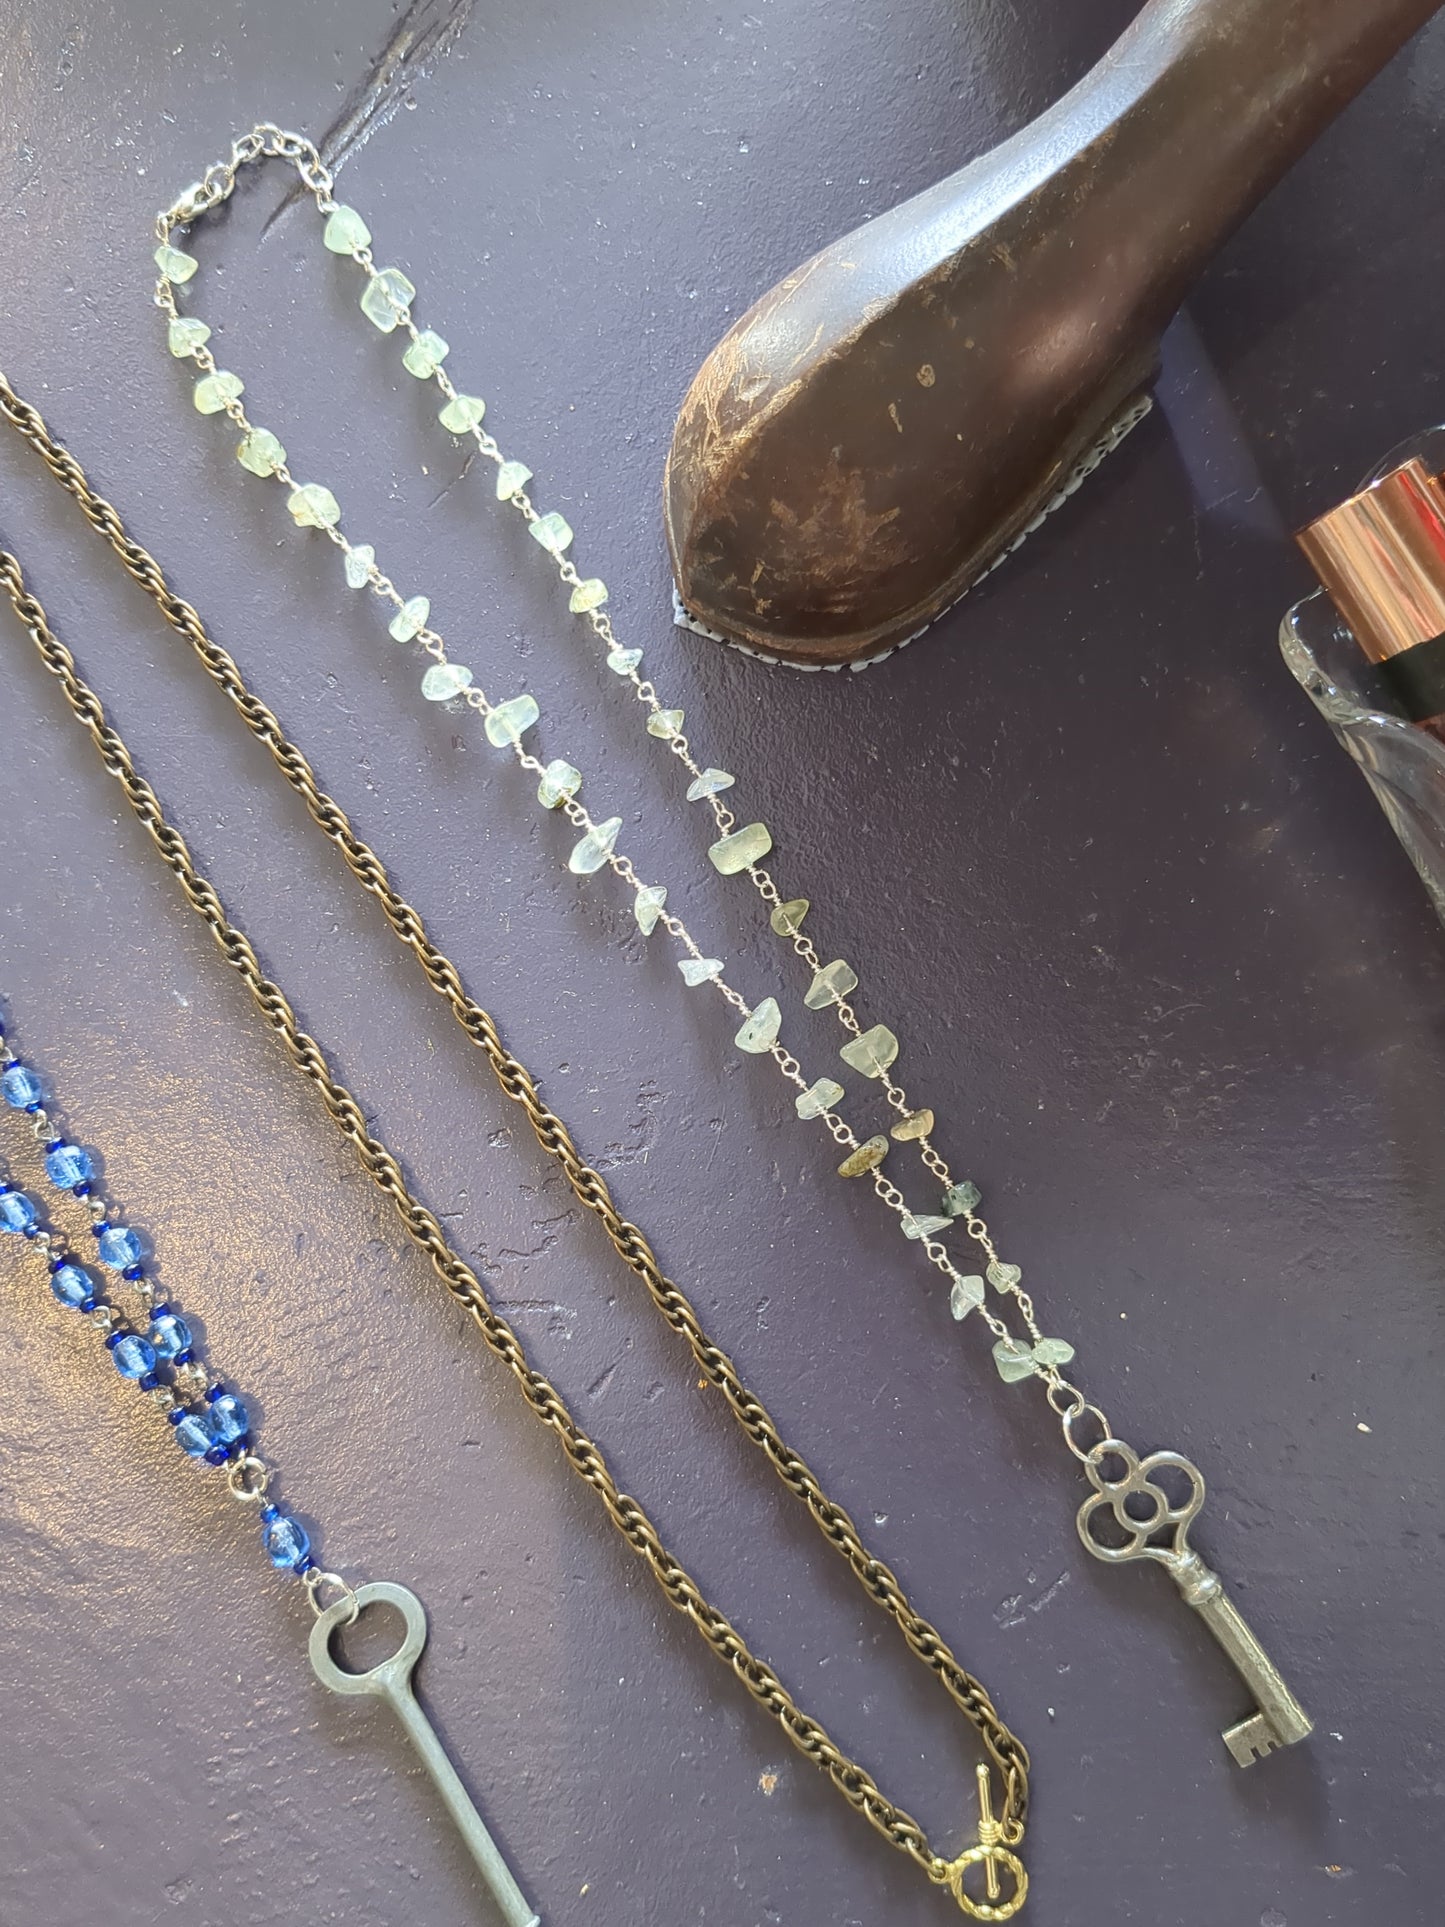 Silver and gemstone skeleton key necklace